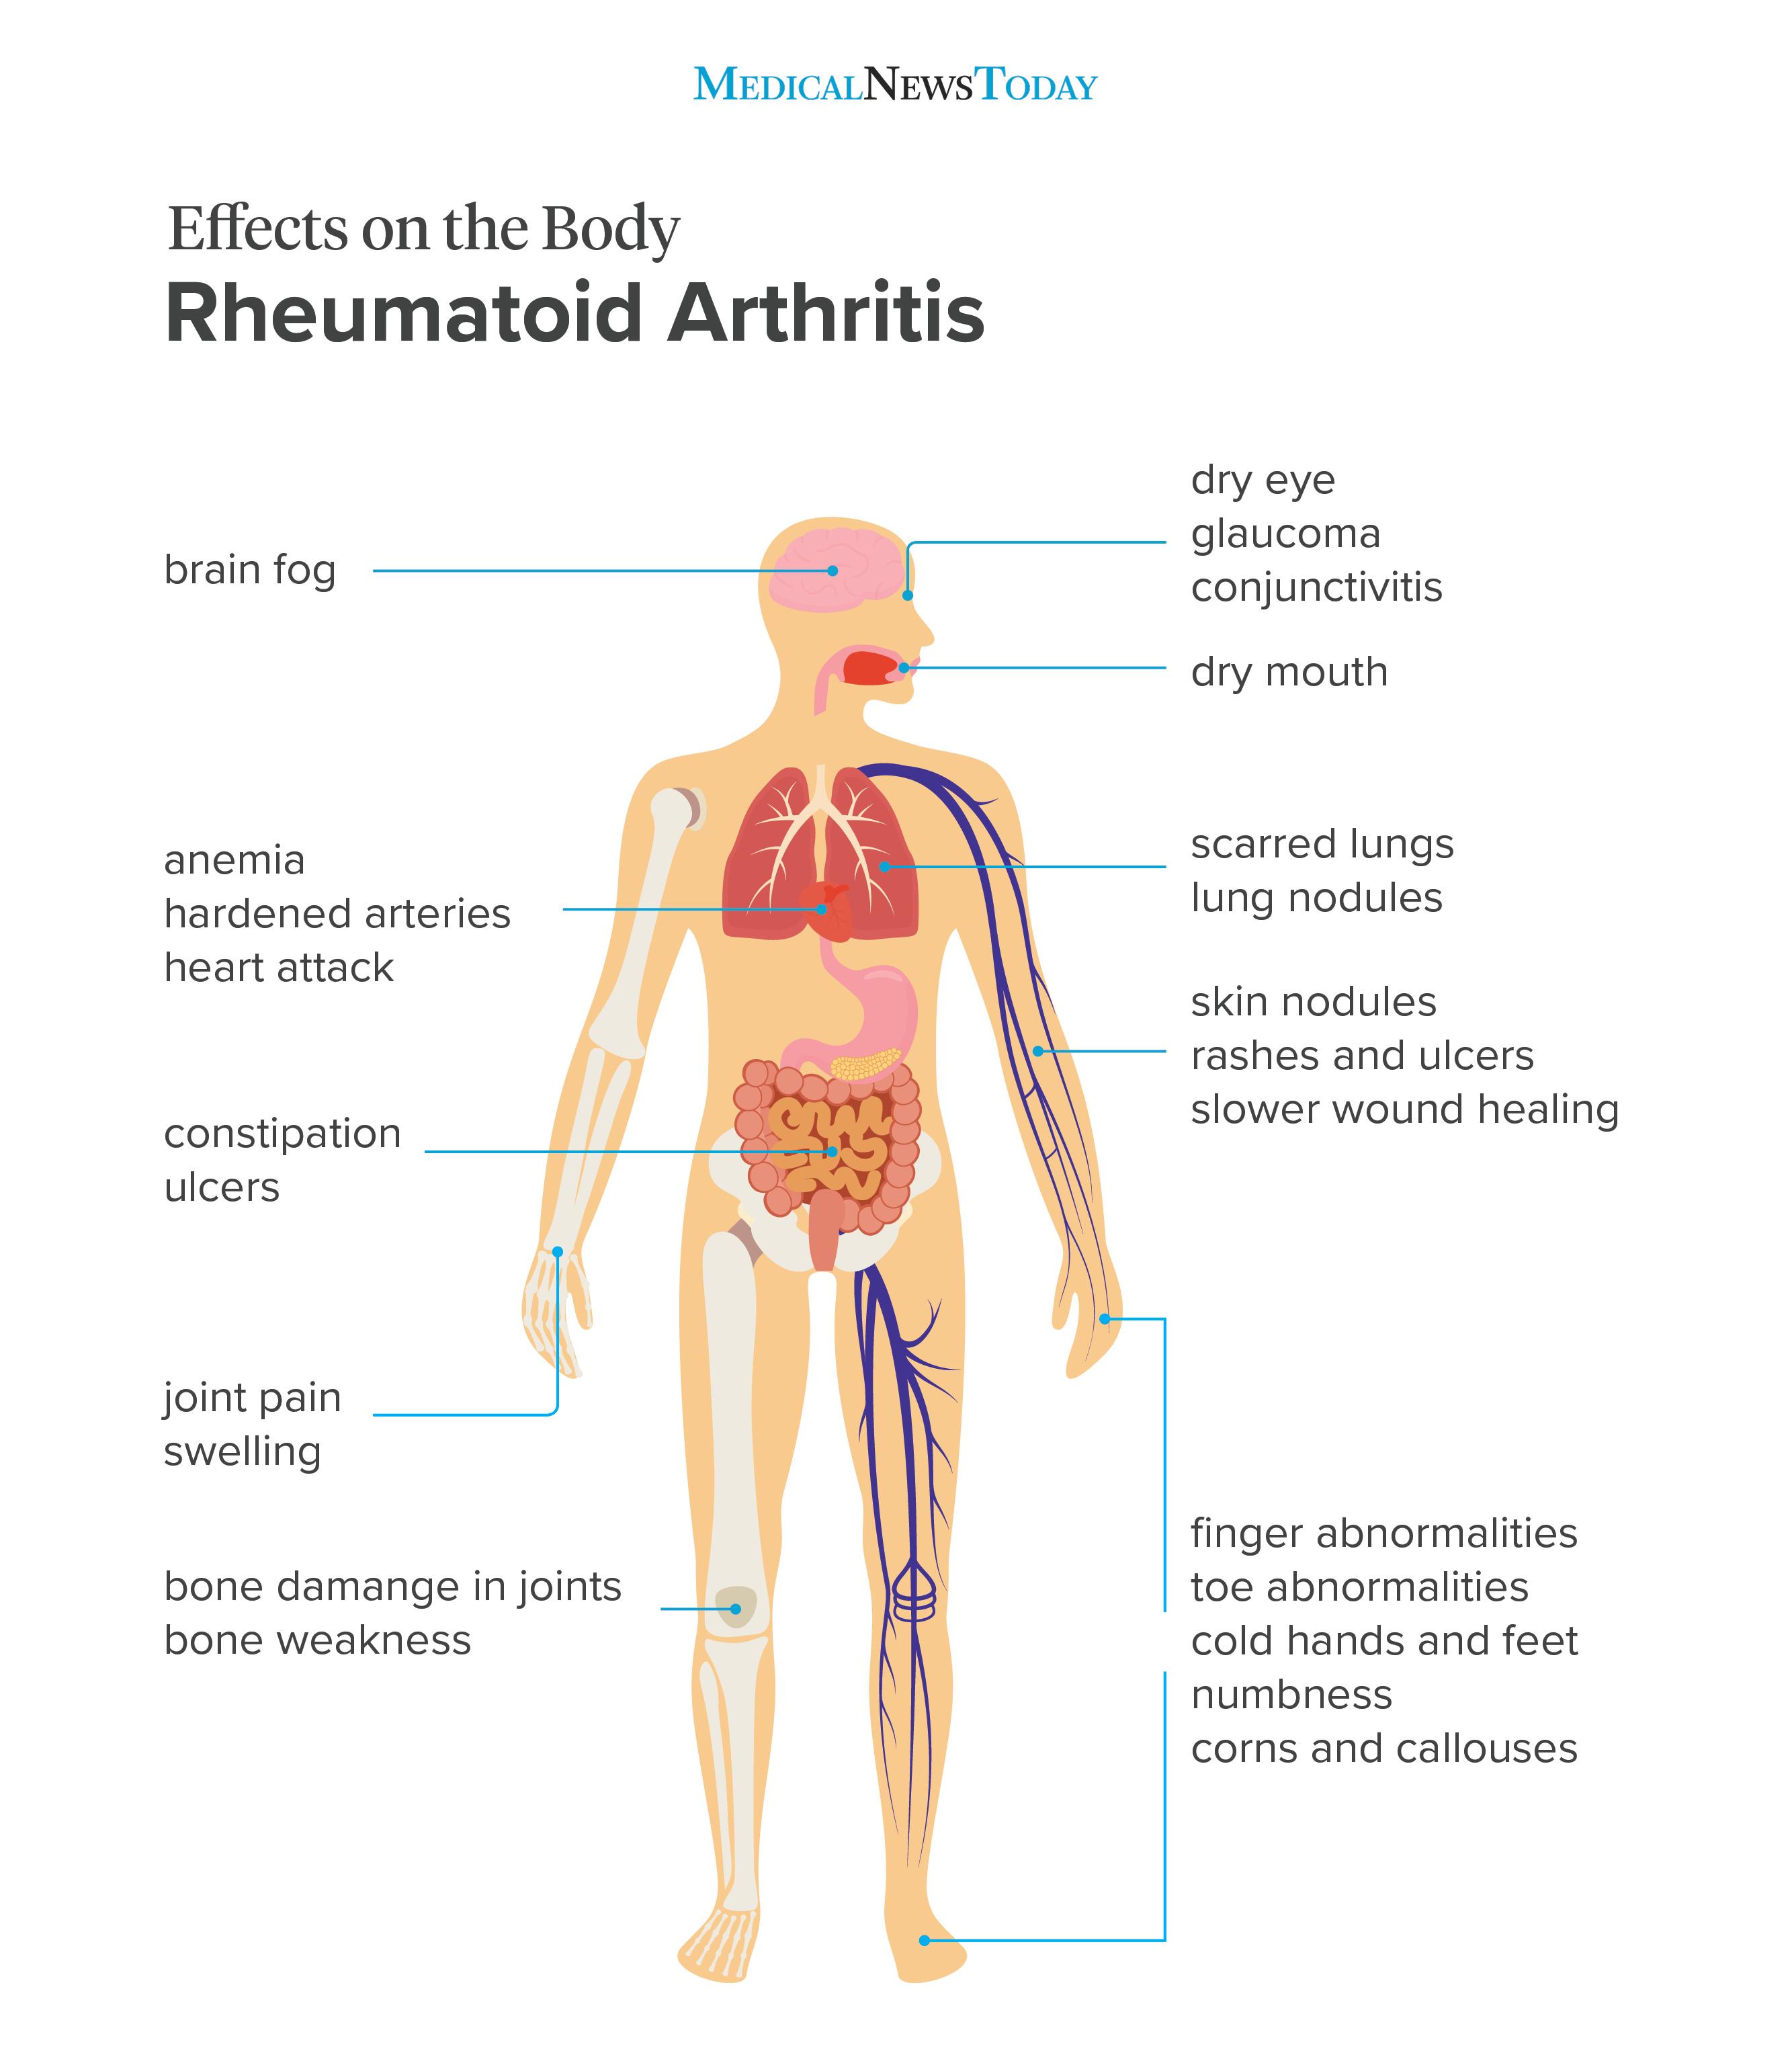 effects on the body of rheumatoid arthritis infographic